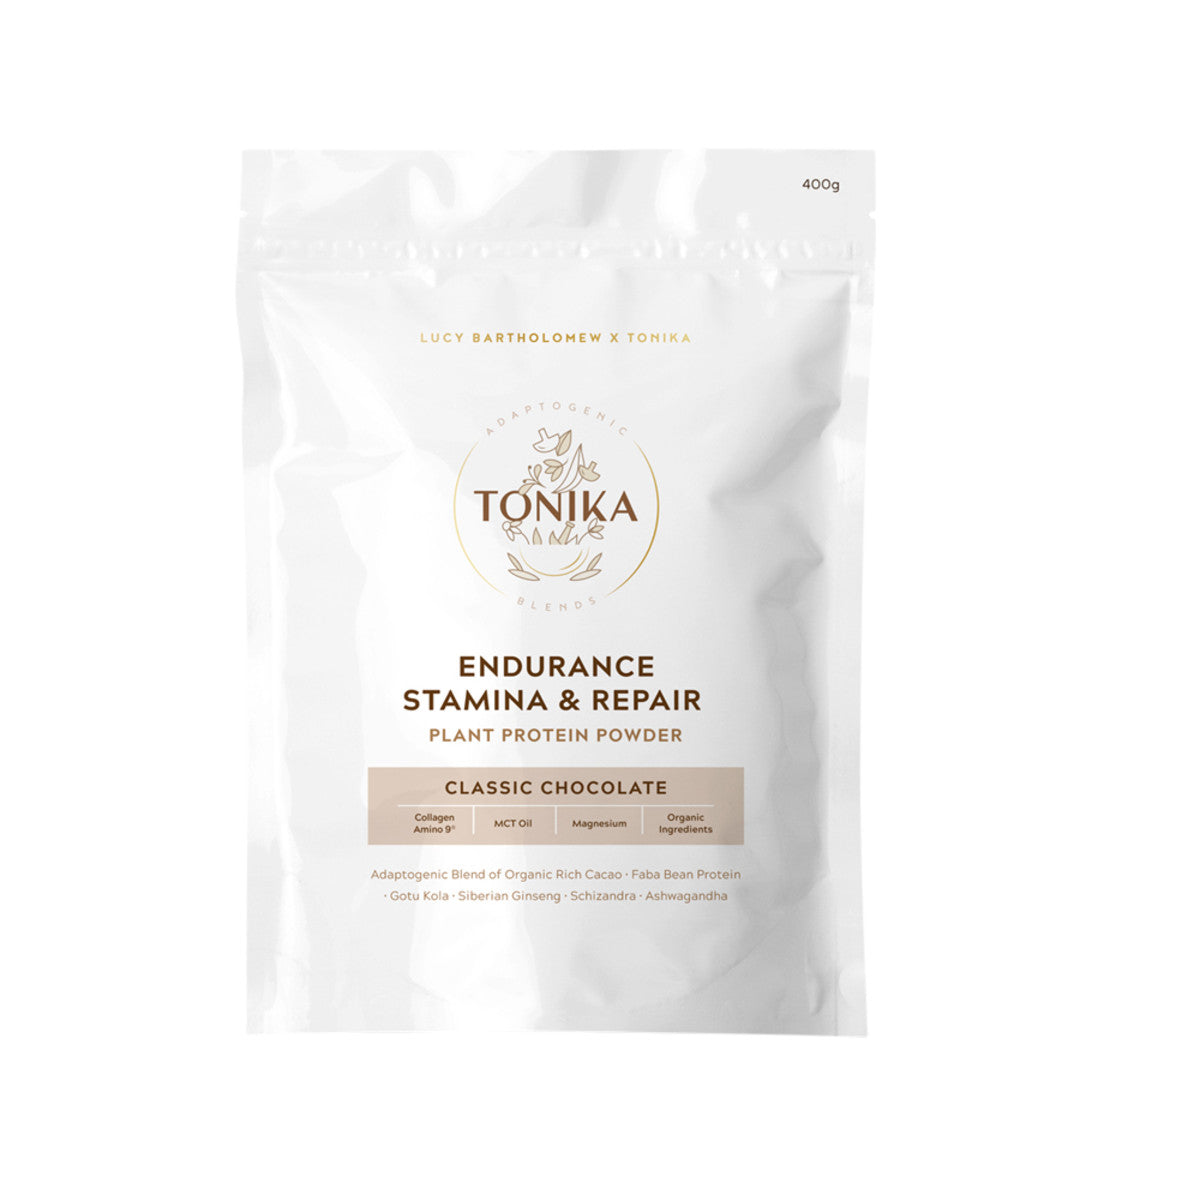 Tonika Plant Protein Endurance Stamina Repair Chocolate 400g